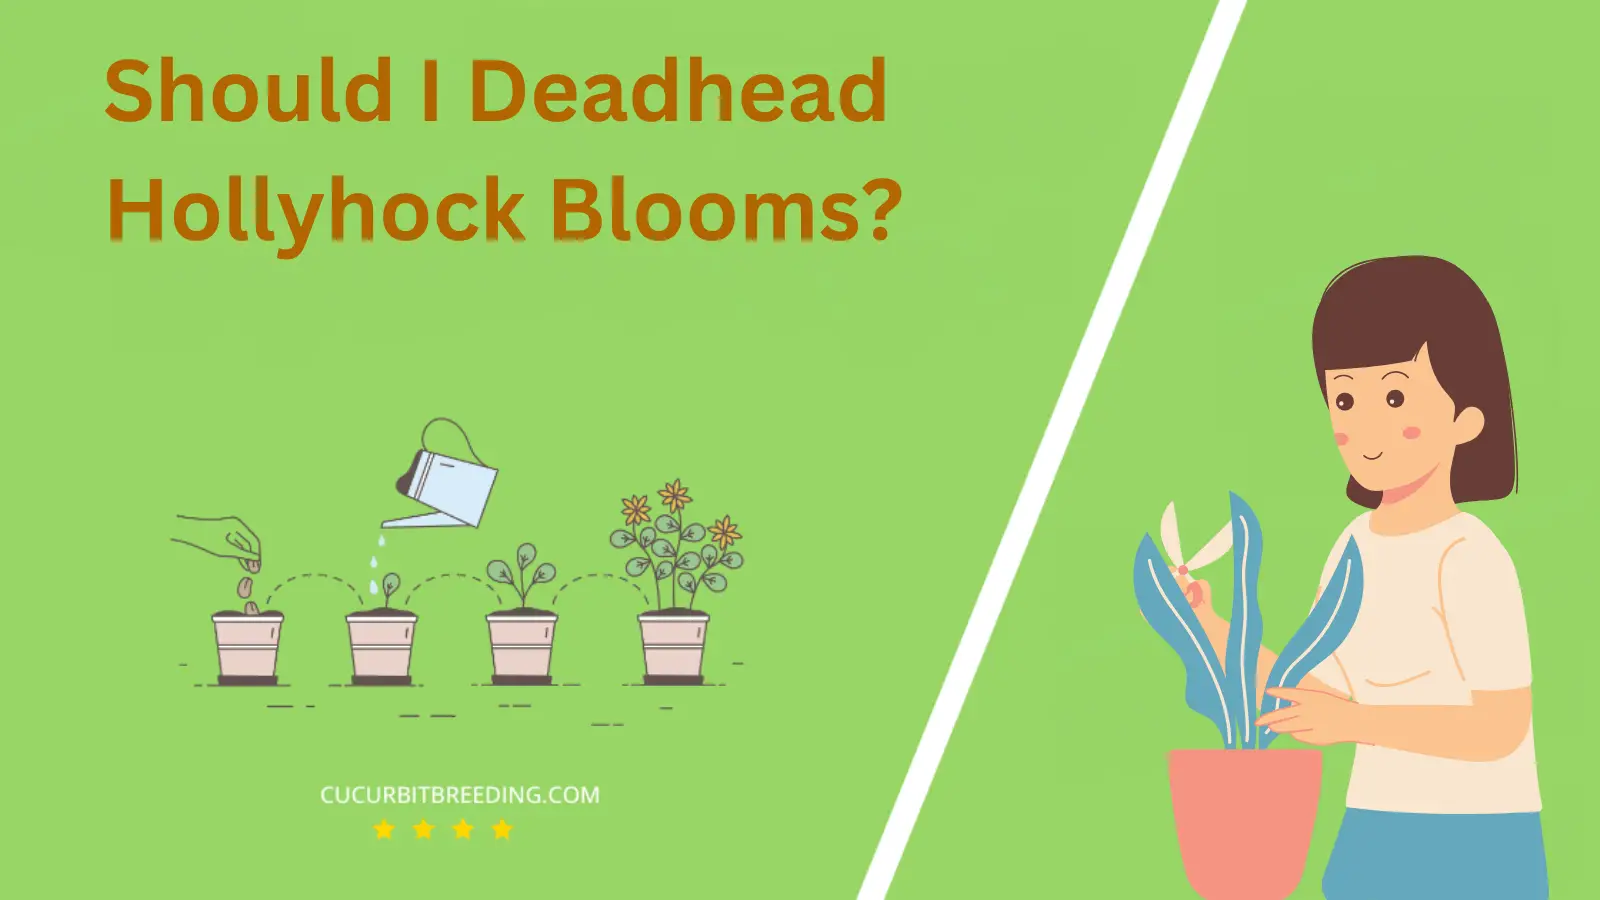 Should I Deadhead Hollyhock Blooms?